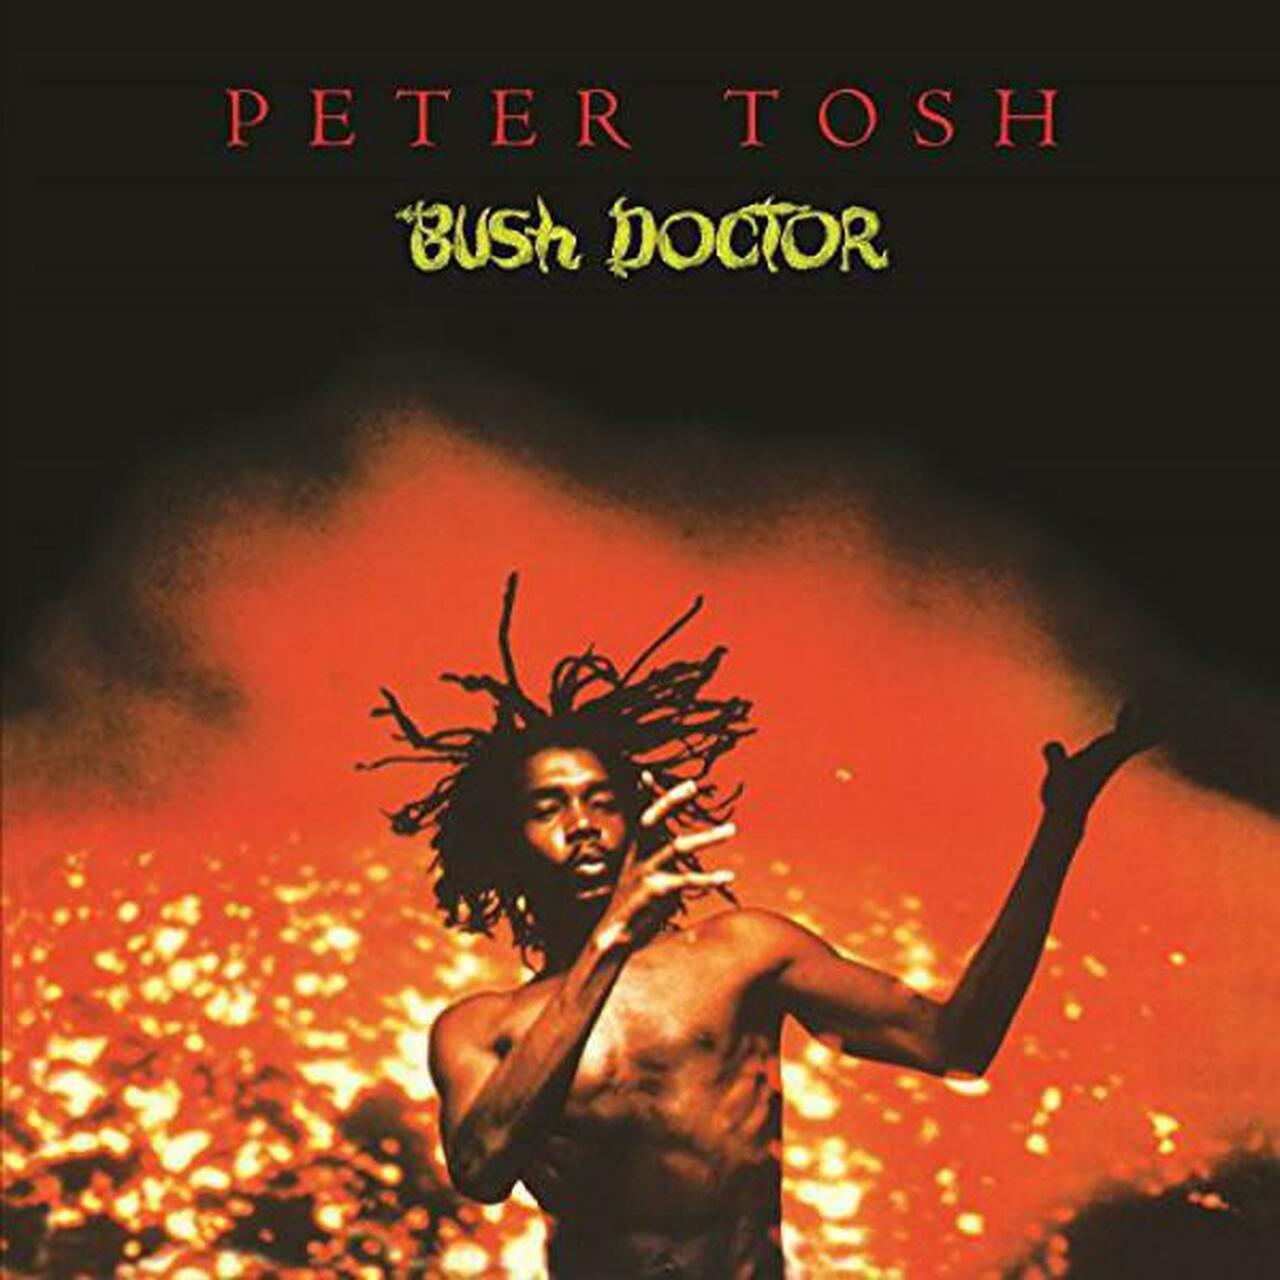 PETER TOSH - Bush Doctor - LP - 180g Limited & Numbered Translucent Red Vinyl